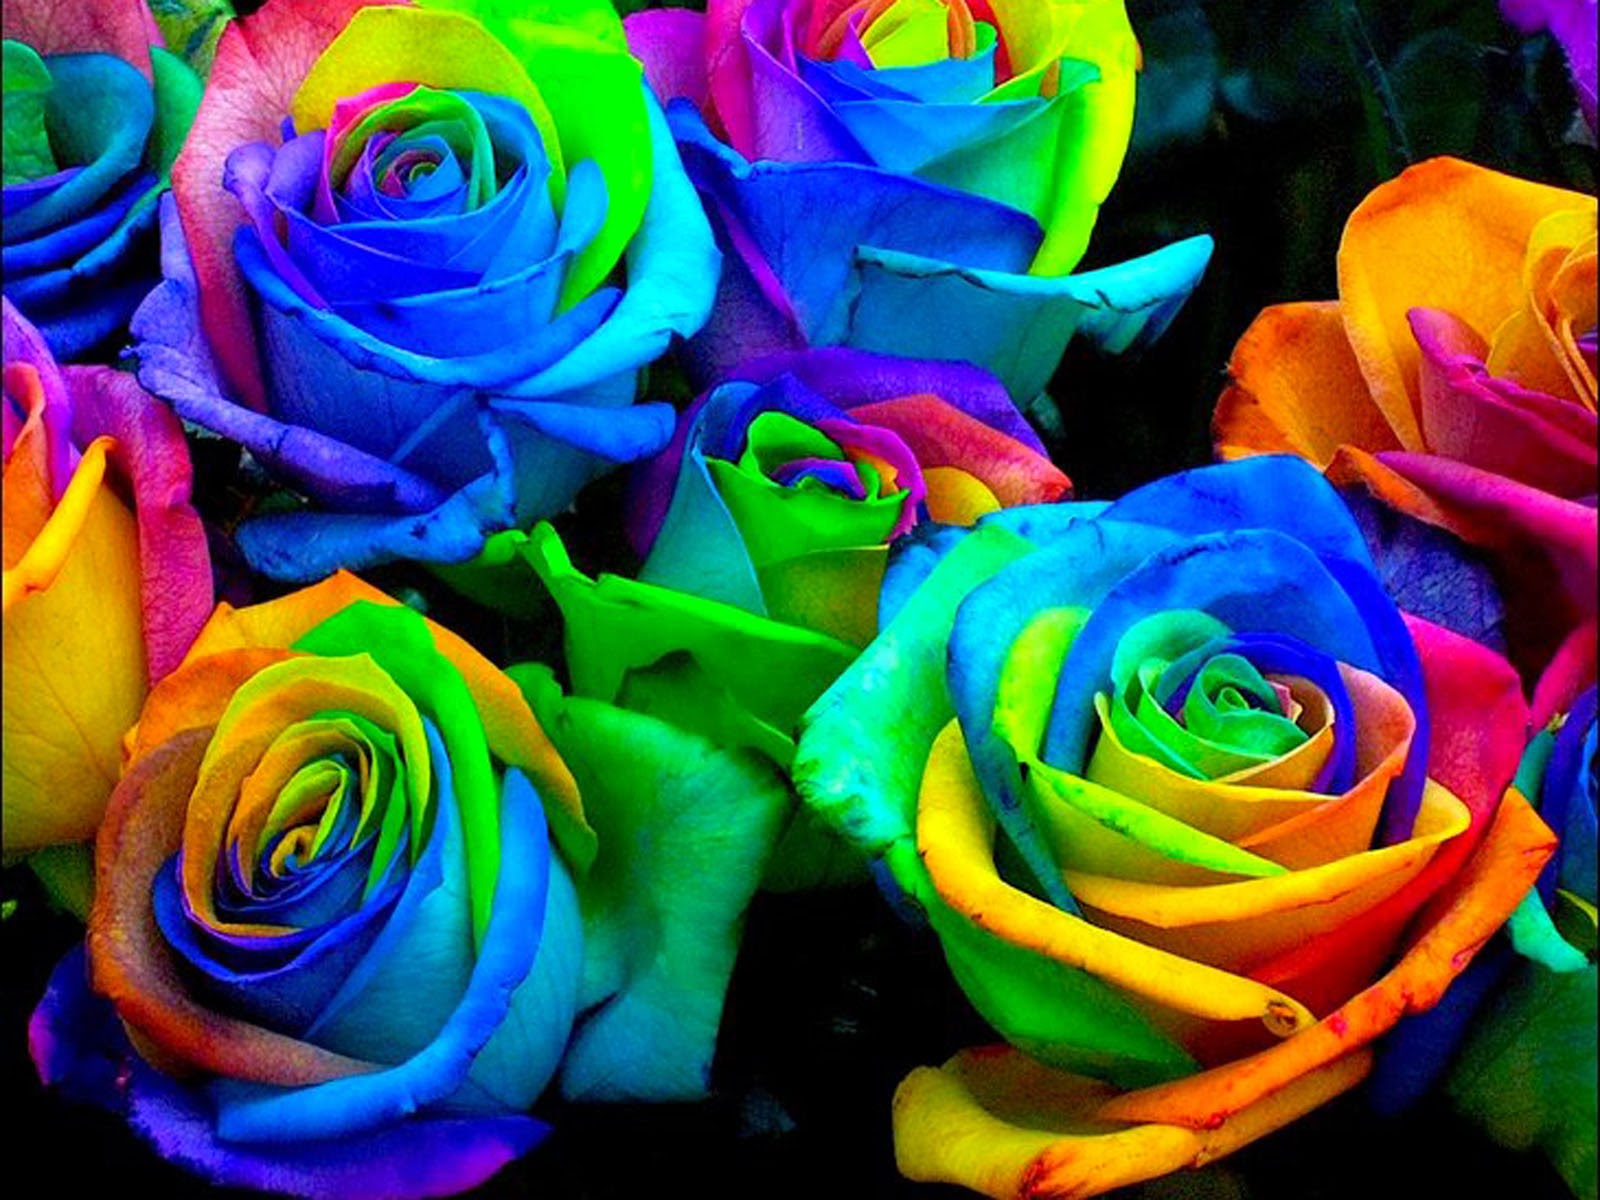 carta da parati rosa arcobaleno,fiore,rosa,pianta fiorita,rose da giardino,arcobaleno rosa